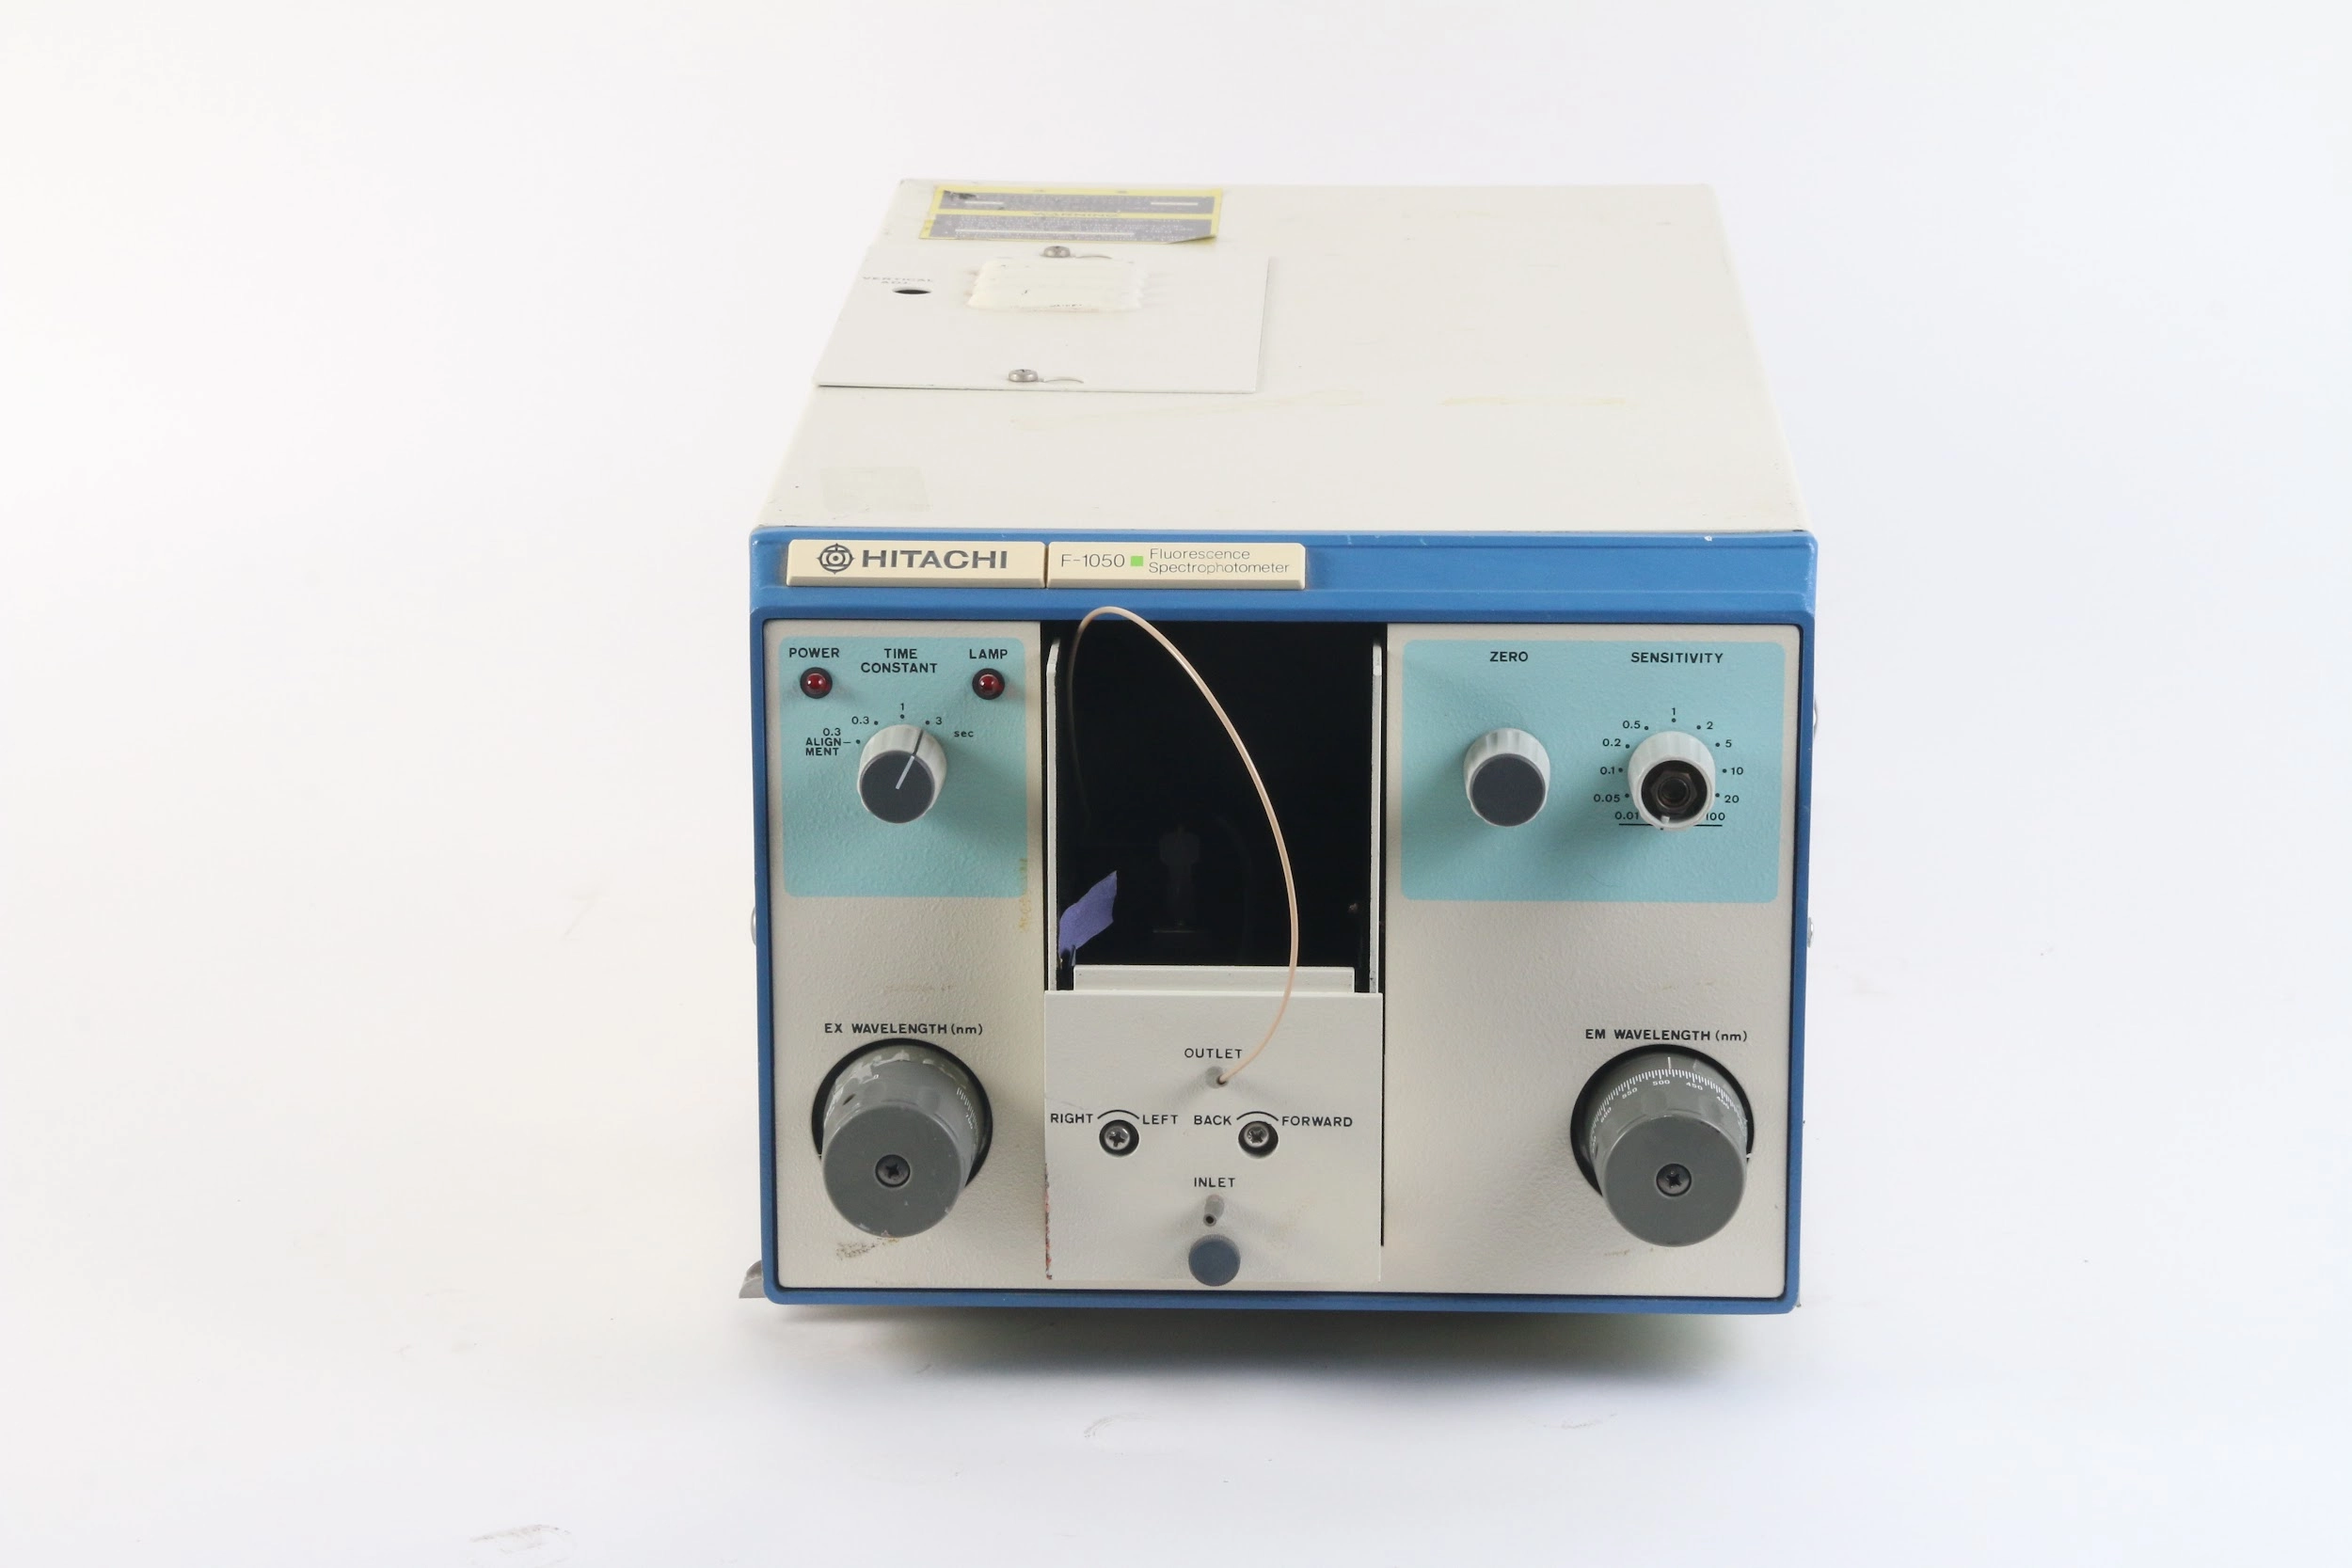 Hitachi F-1050 Fluorescence Spectrophotometer